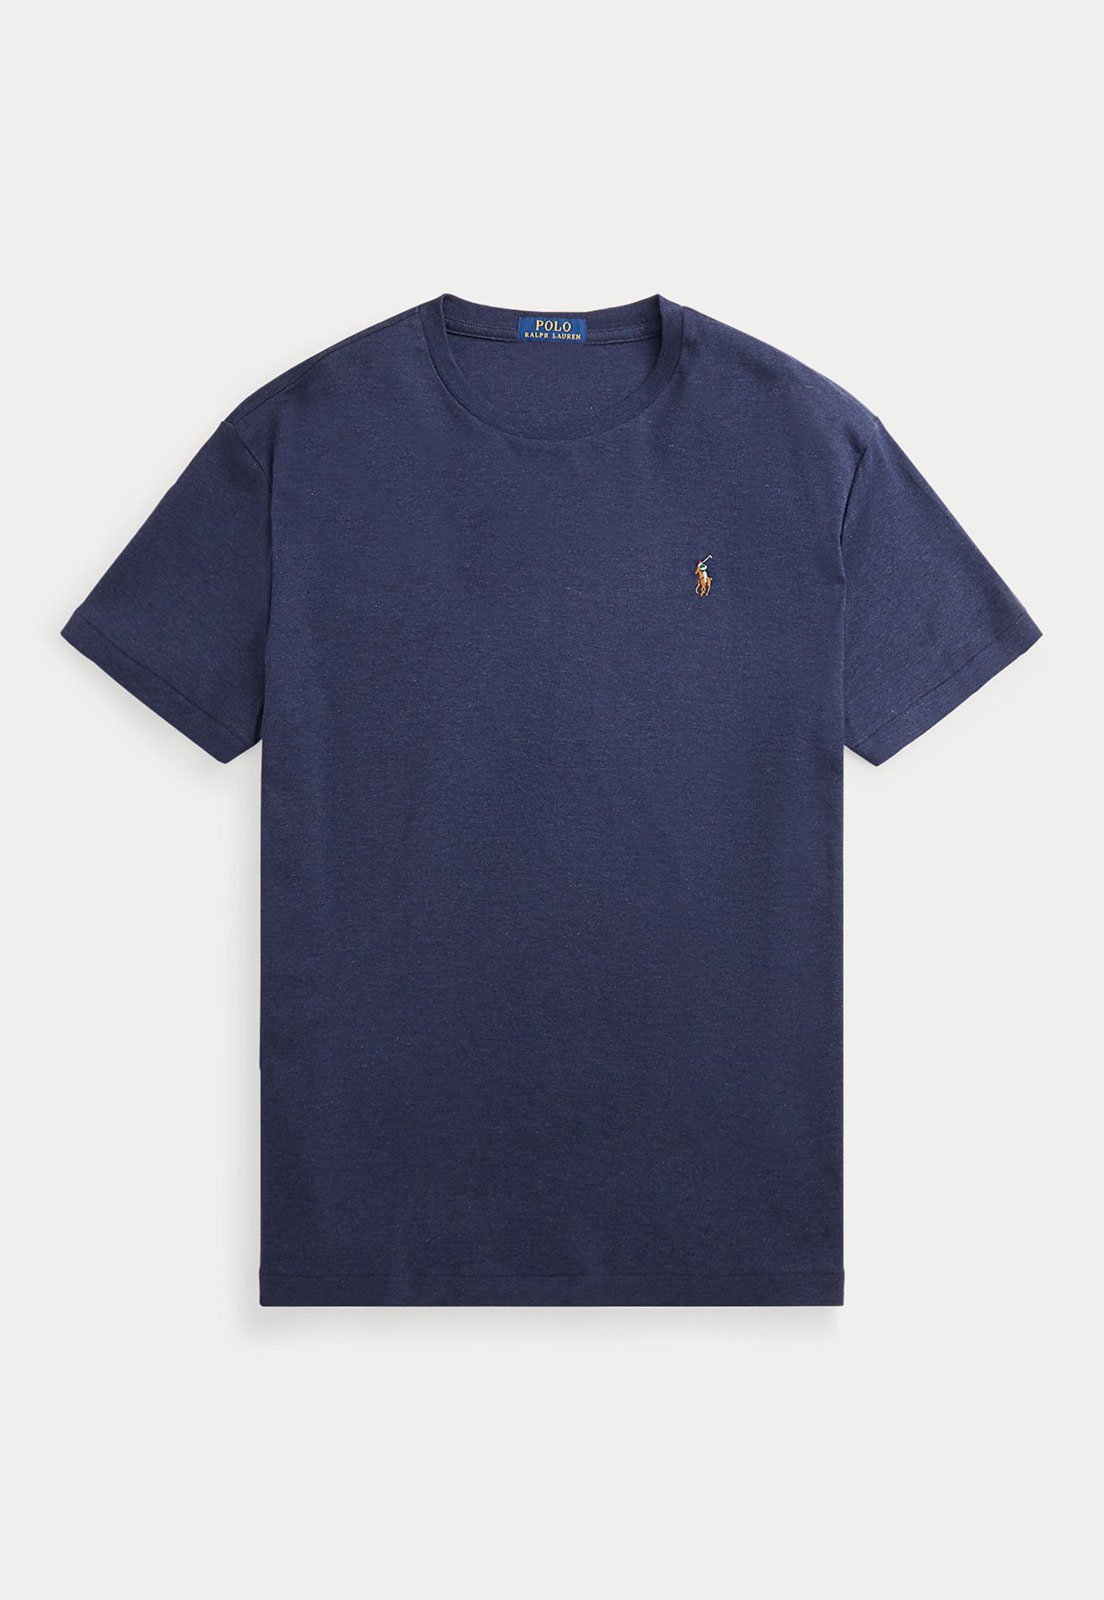 Camiseta Polo Ralph Lauren Logo Azul-Marinho